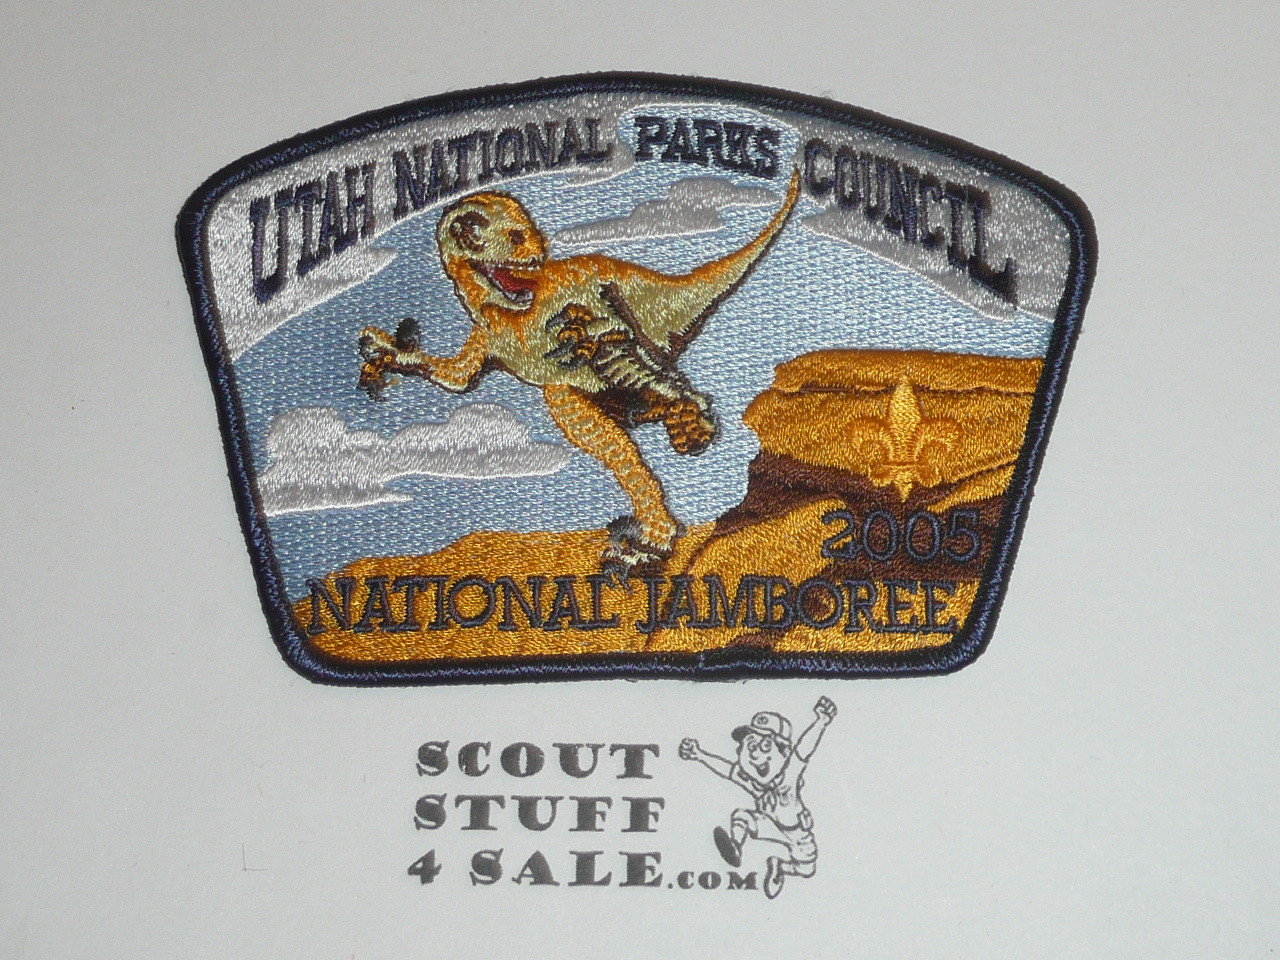 2005 National Jamboree JSP - Utah National Parks Council